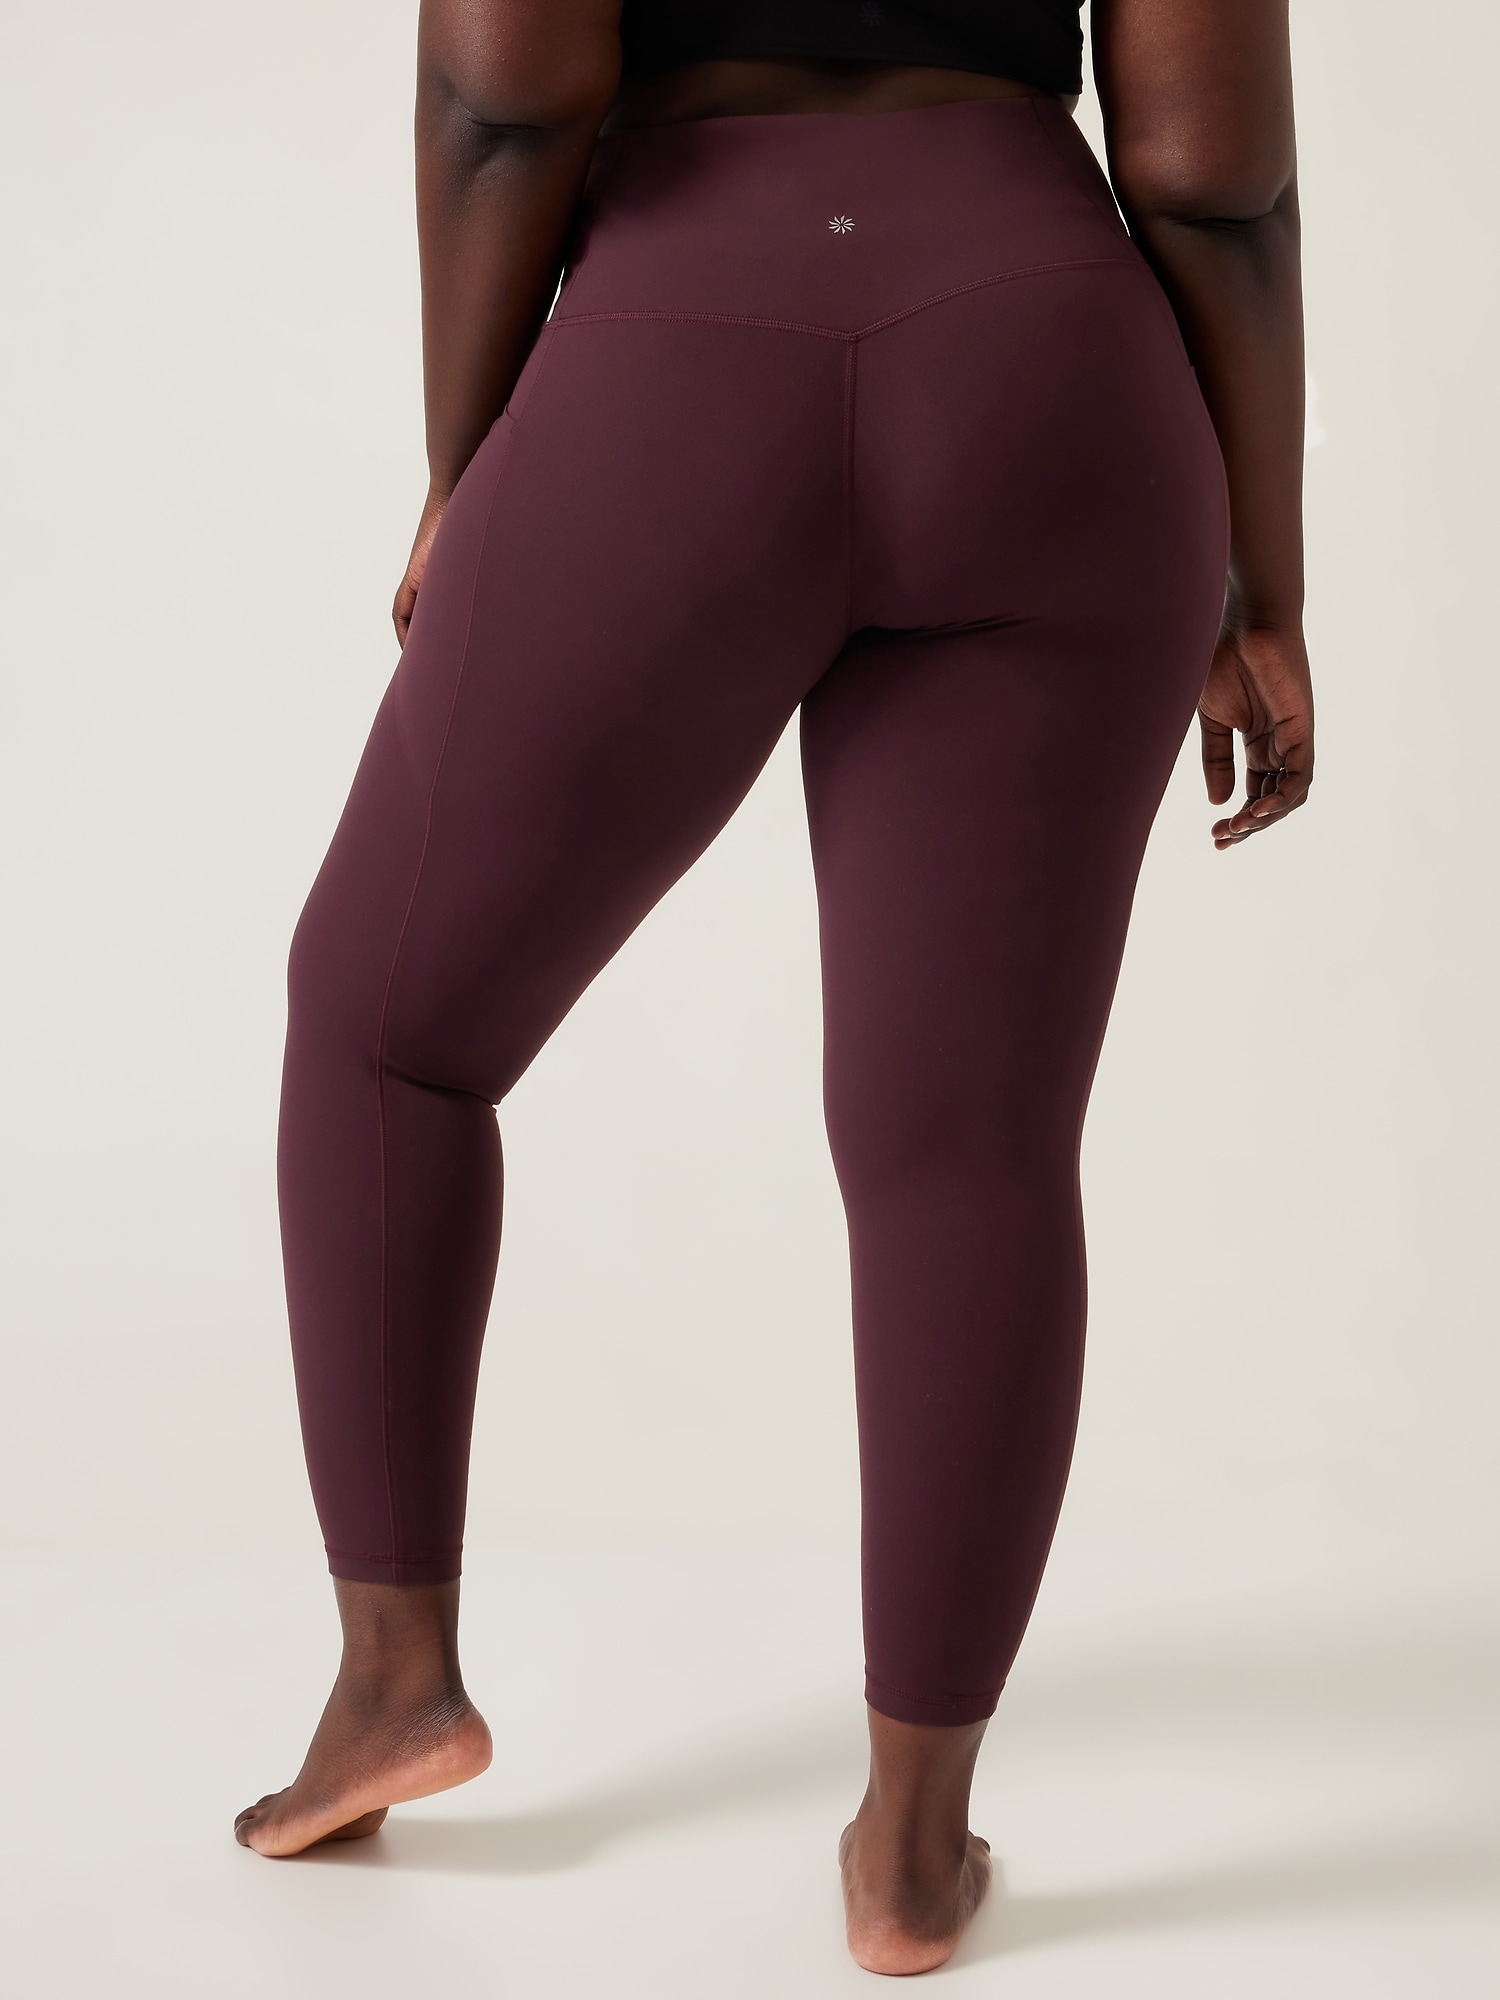 Athleta Ivory Sweatpants Size M - 60% off